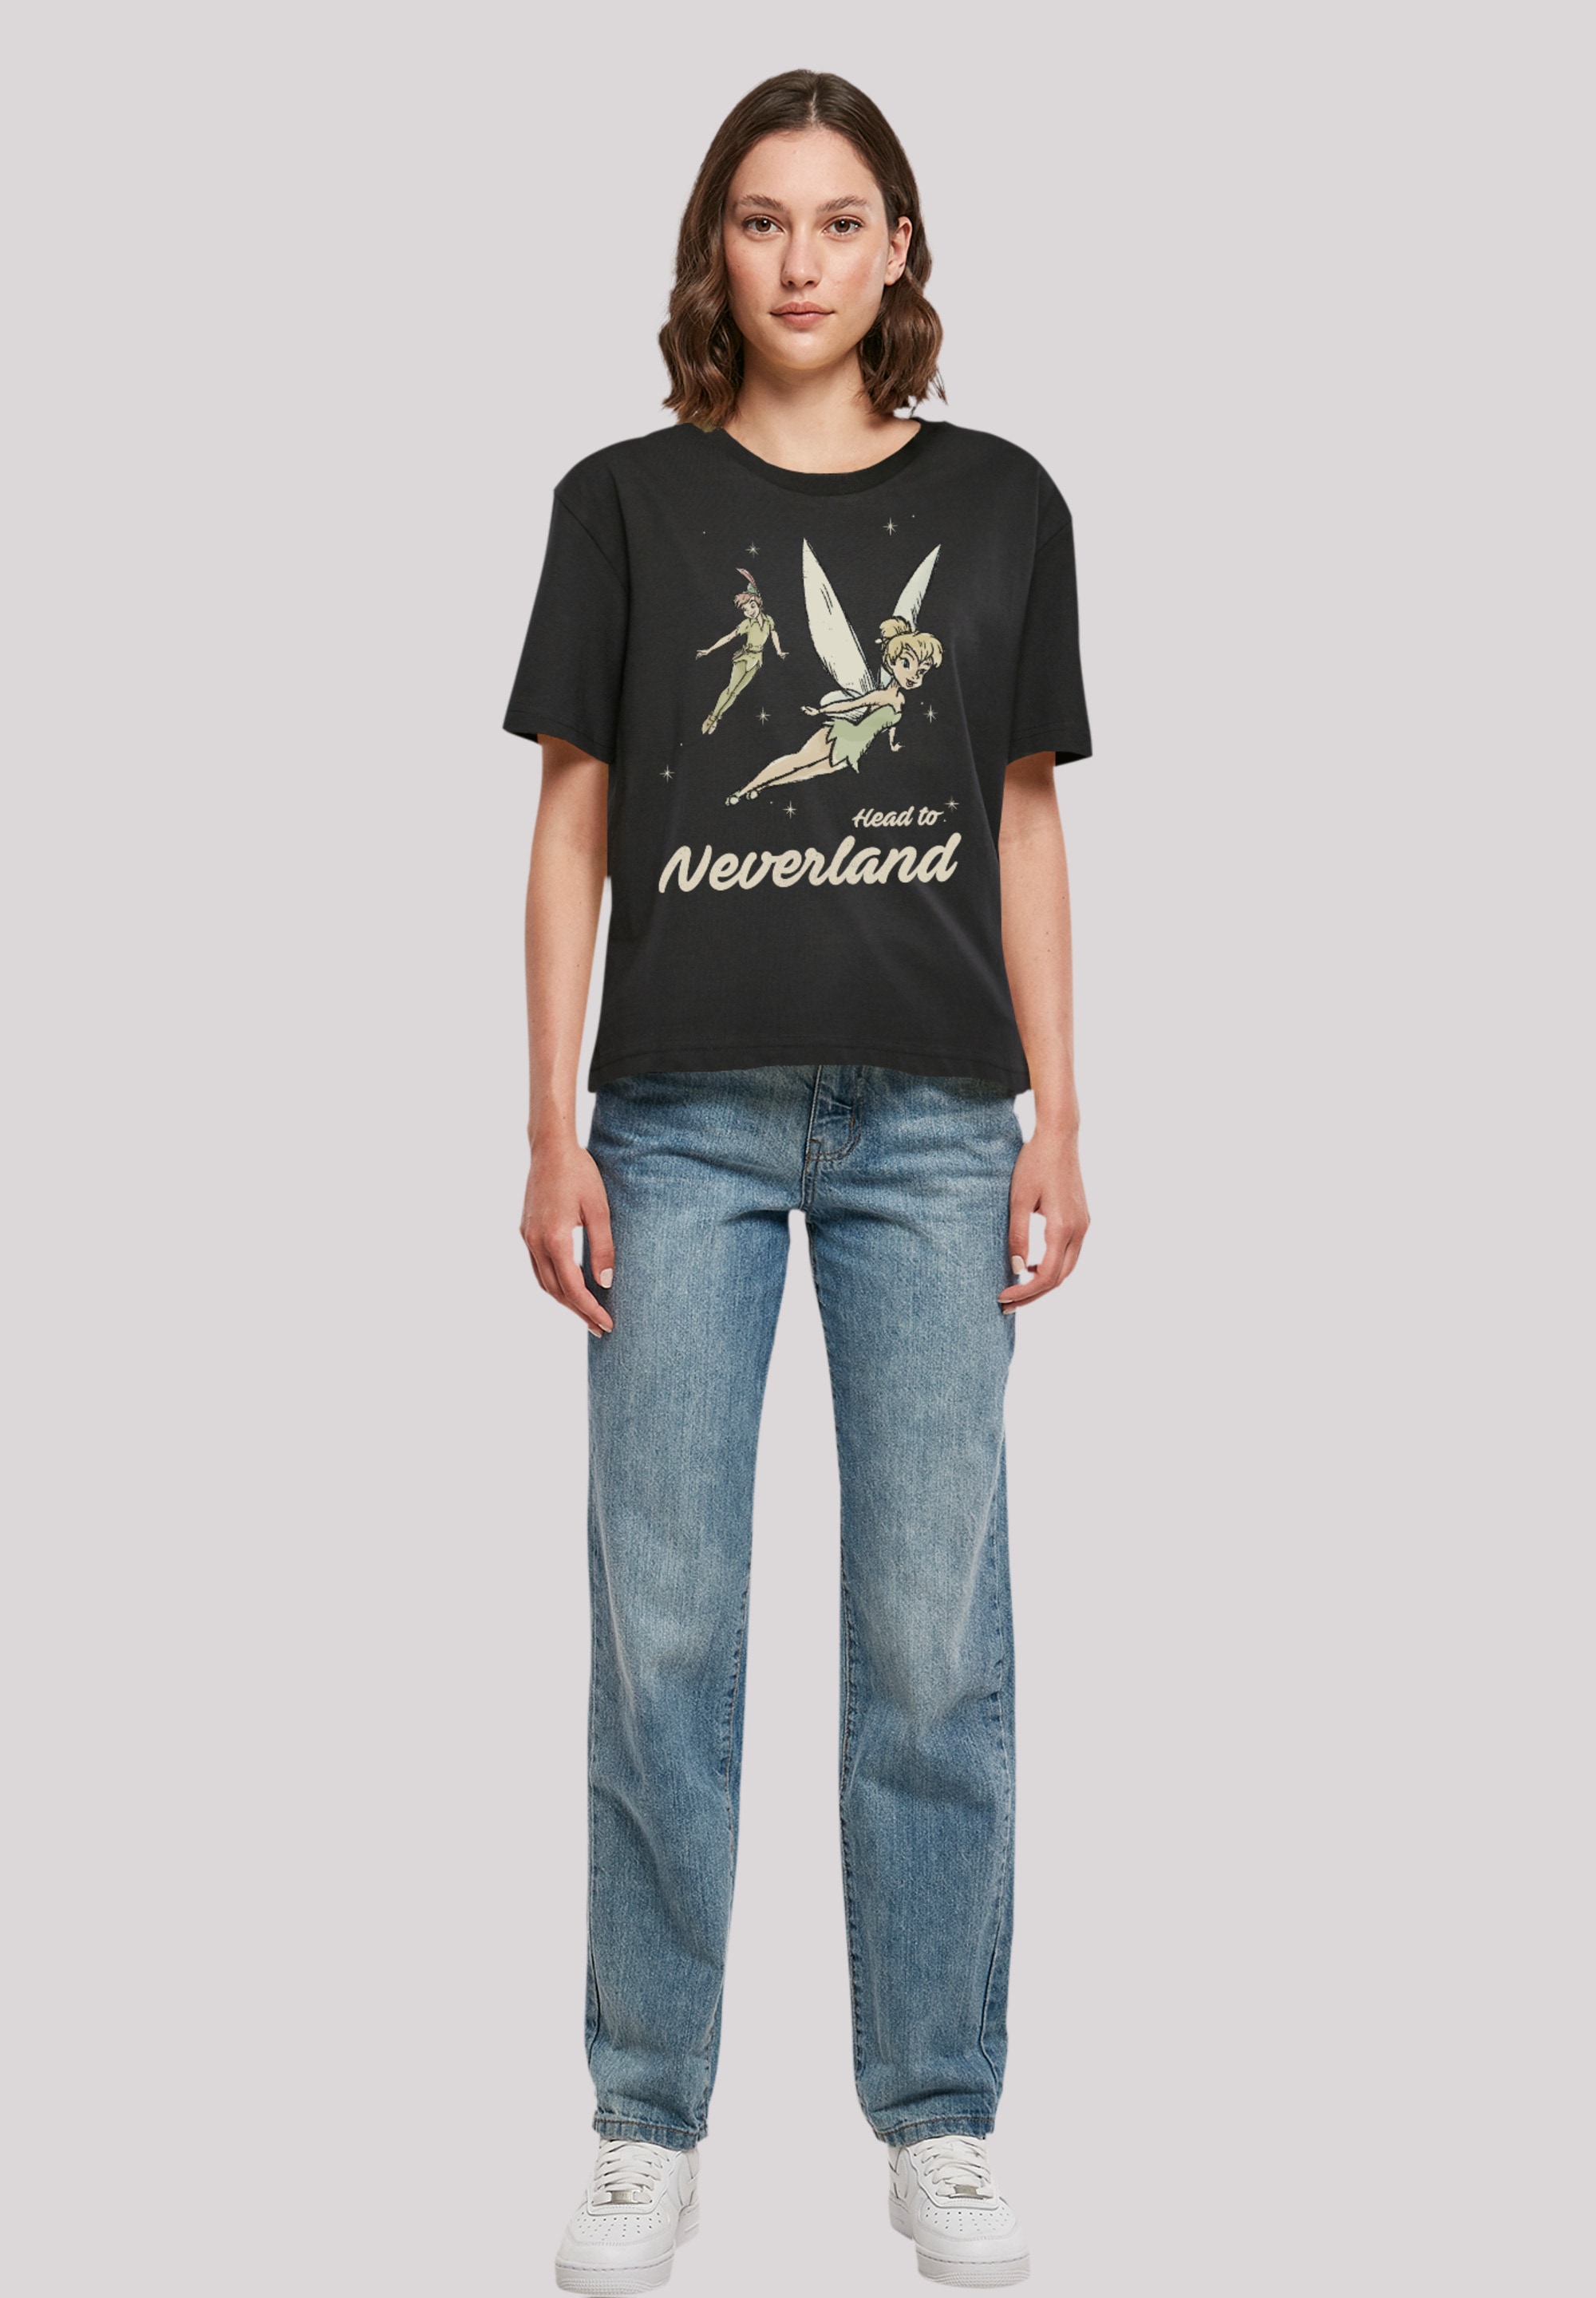 F4NT4STIC T-Shirt »Disney Peter Pan Head To Neverland«, Premium Qualität |  I\'m walking